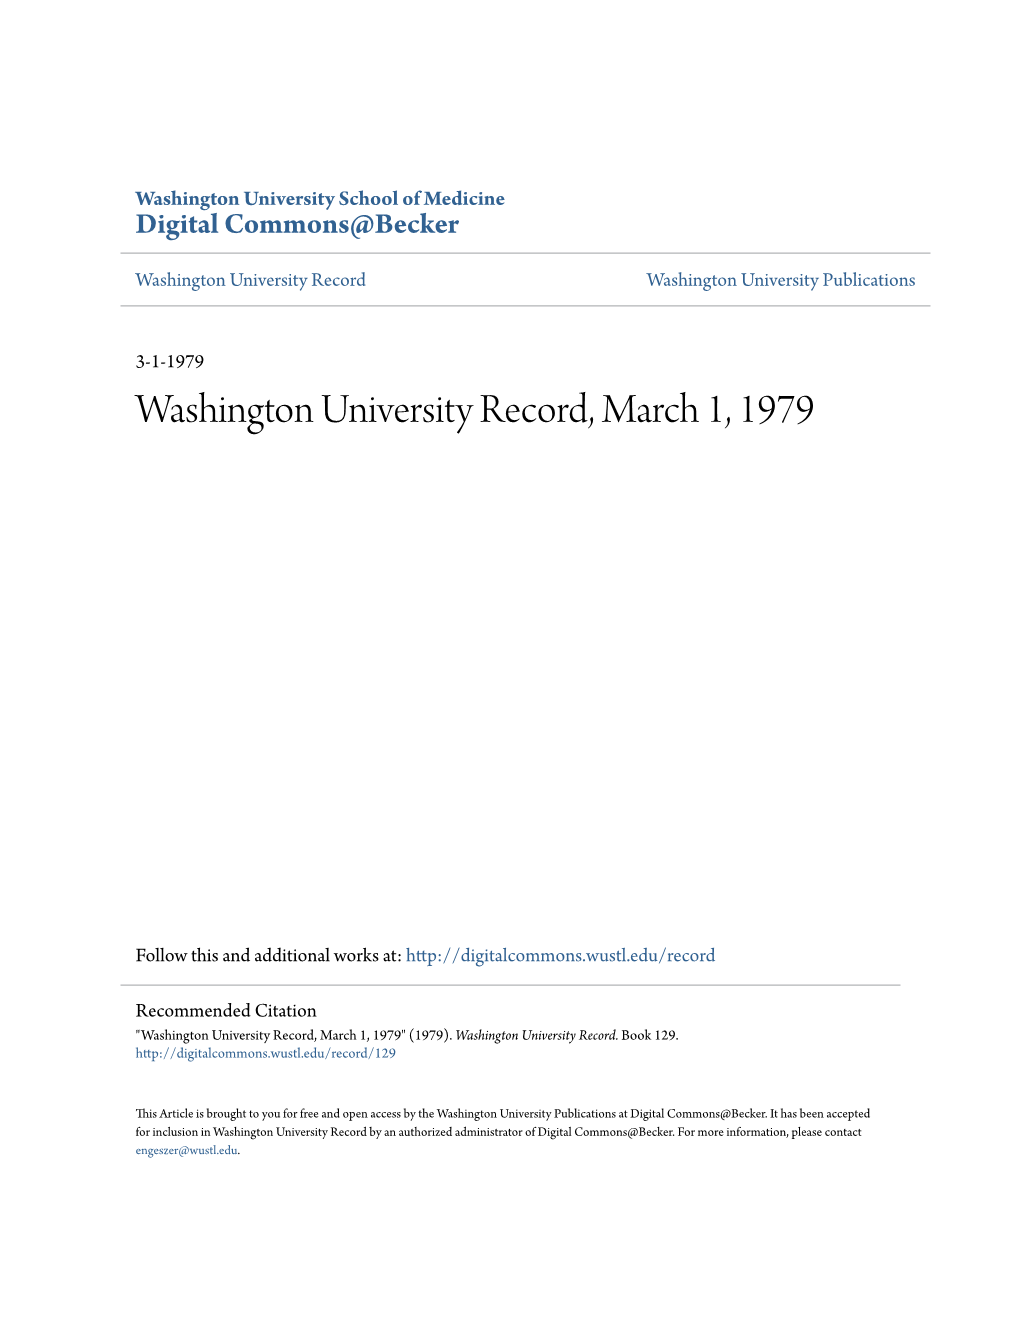 Washington University Record, March 1, 1979